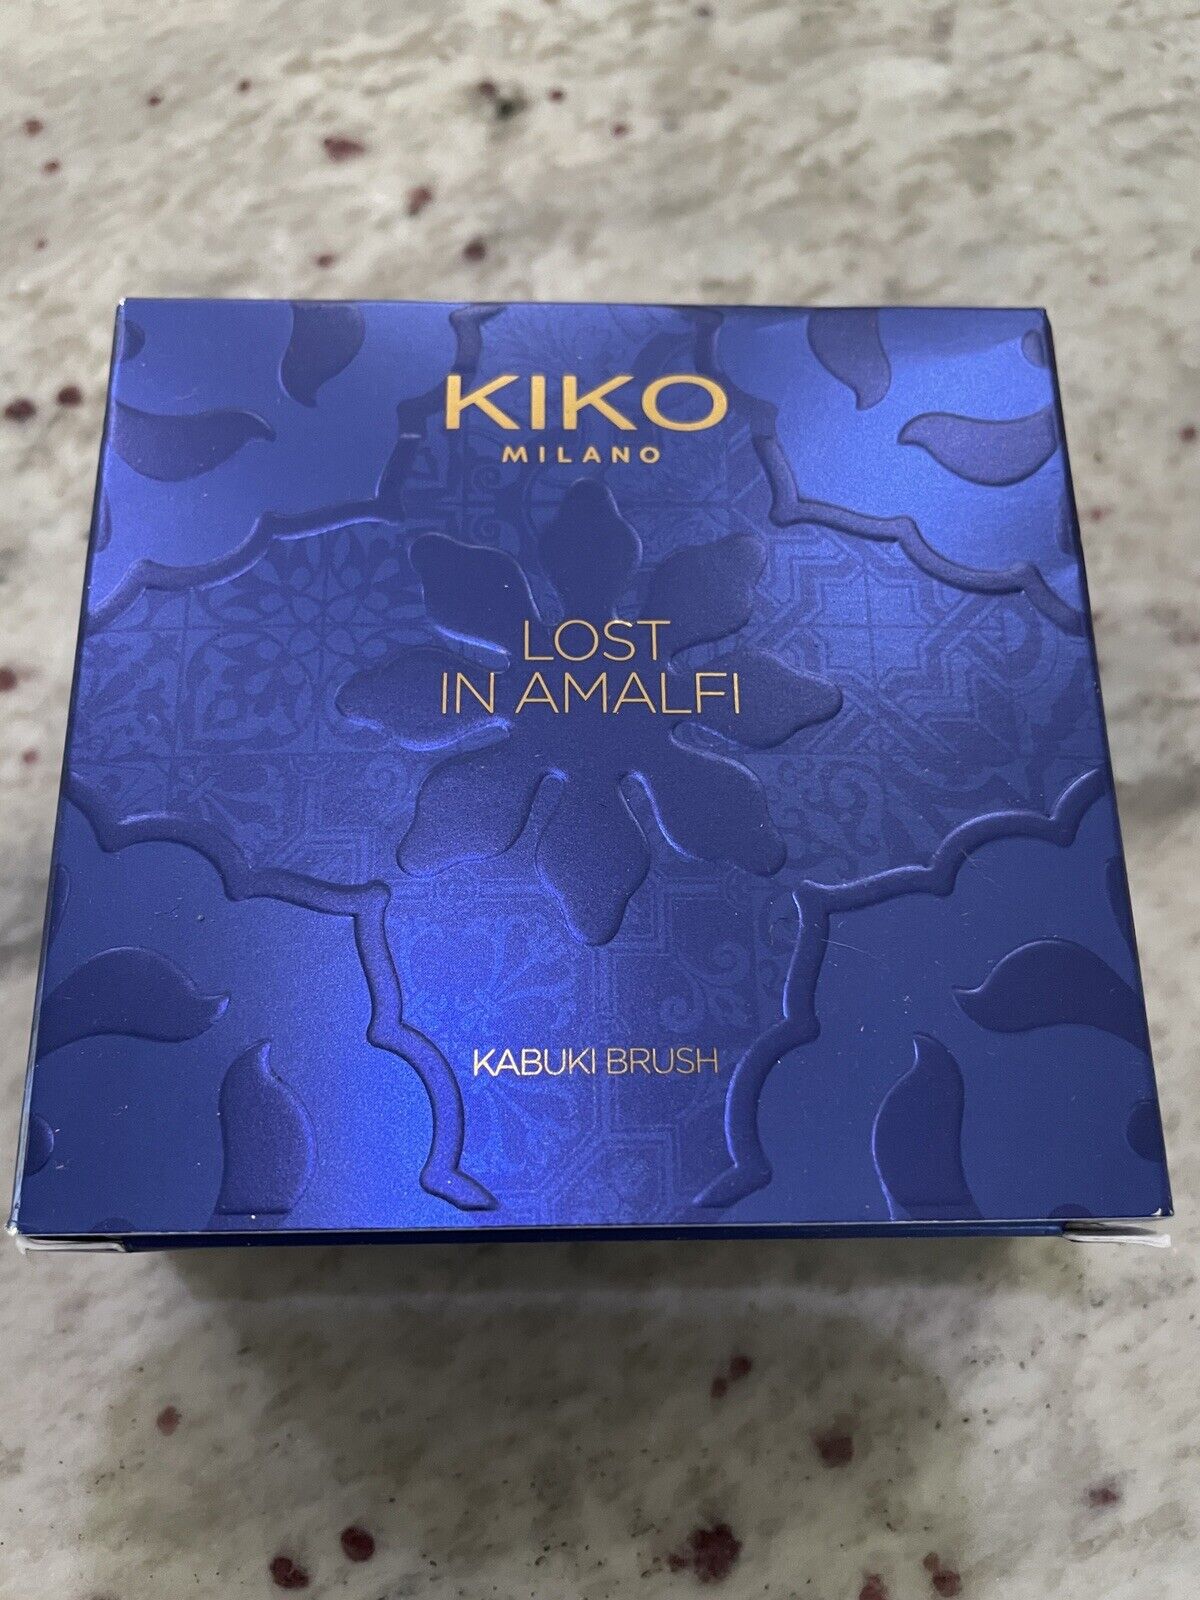 Kiko Milano Lost in Amalfi Kabuki Cosmetic Brush NEW in box